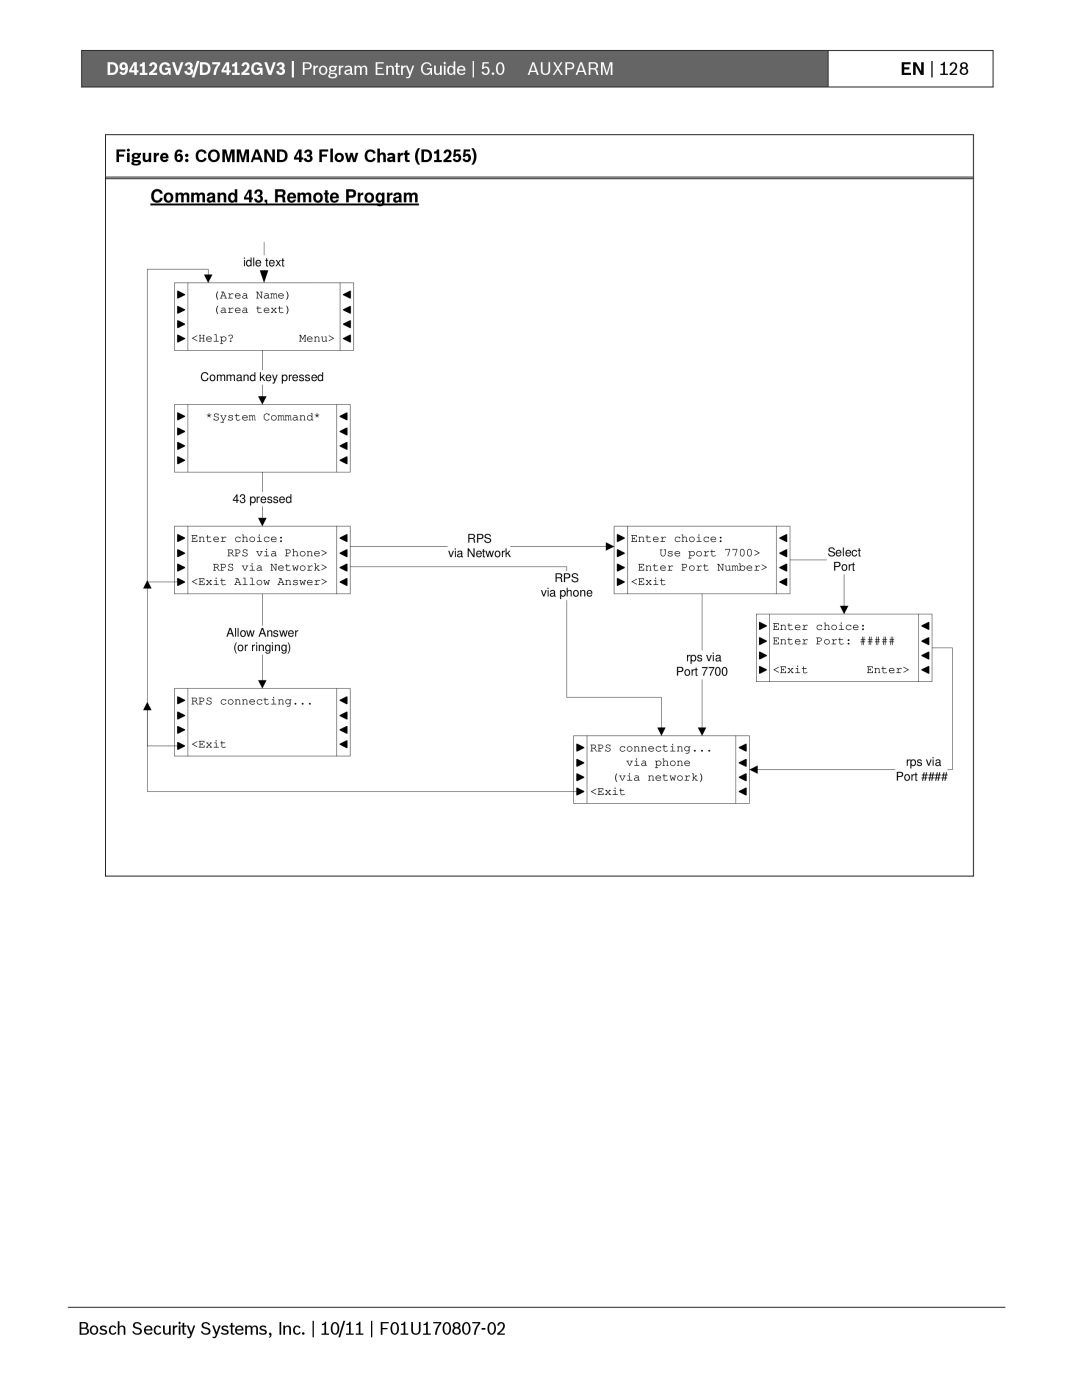 Bosch Appliances D9412GV3 manual Command 43, Remote Program 